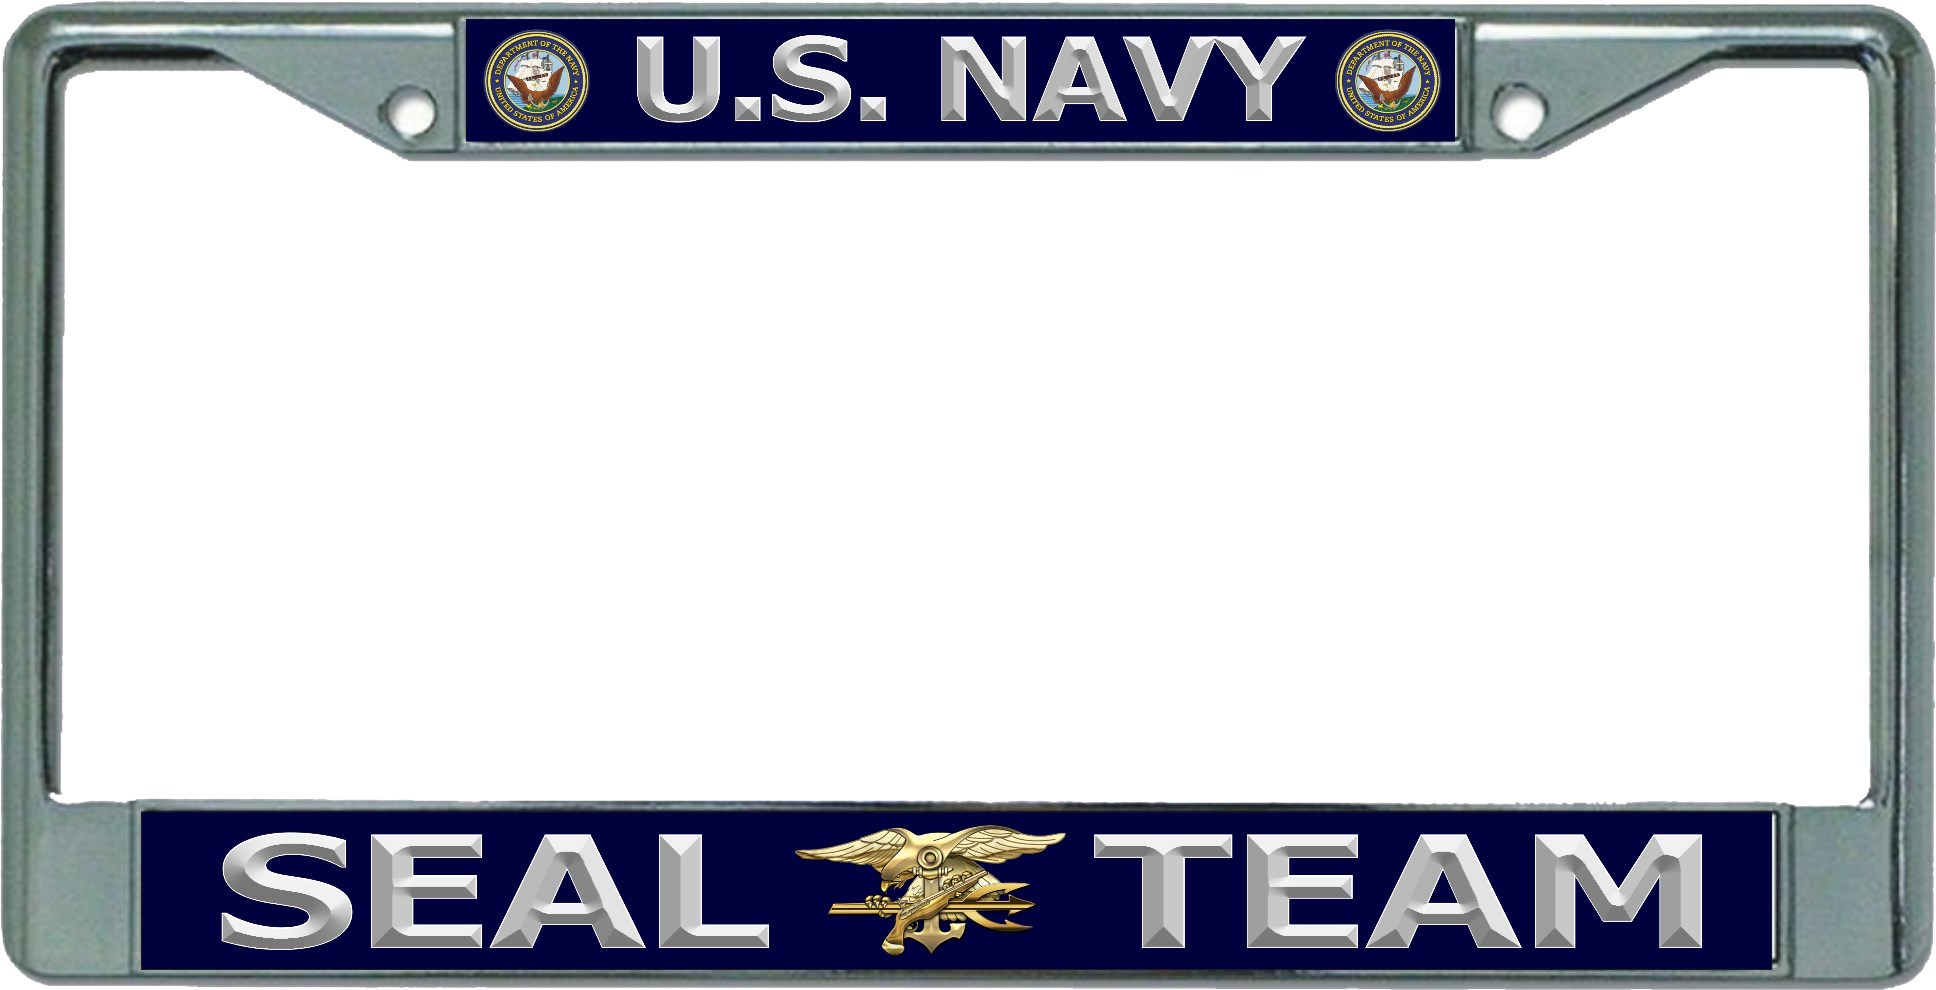 License Plates Online U.S. Navy Seal Team #2 Chrome License Plate Frame